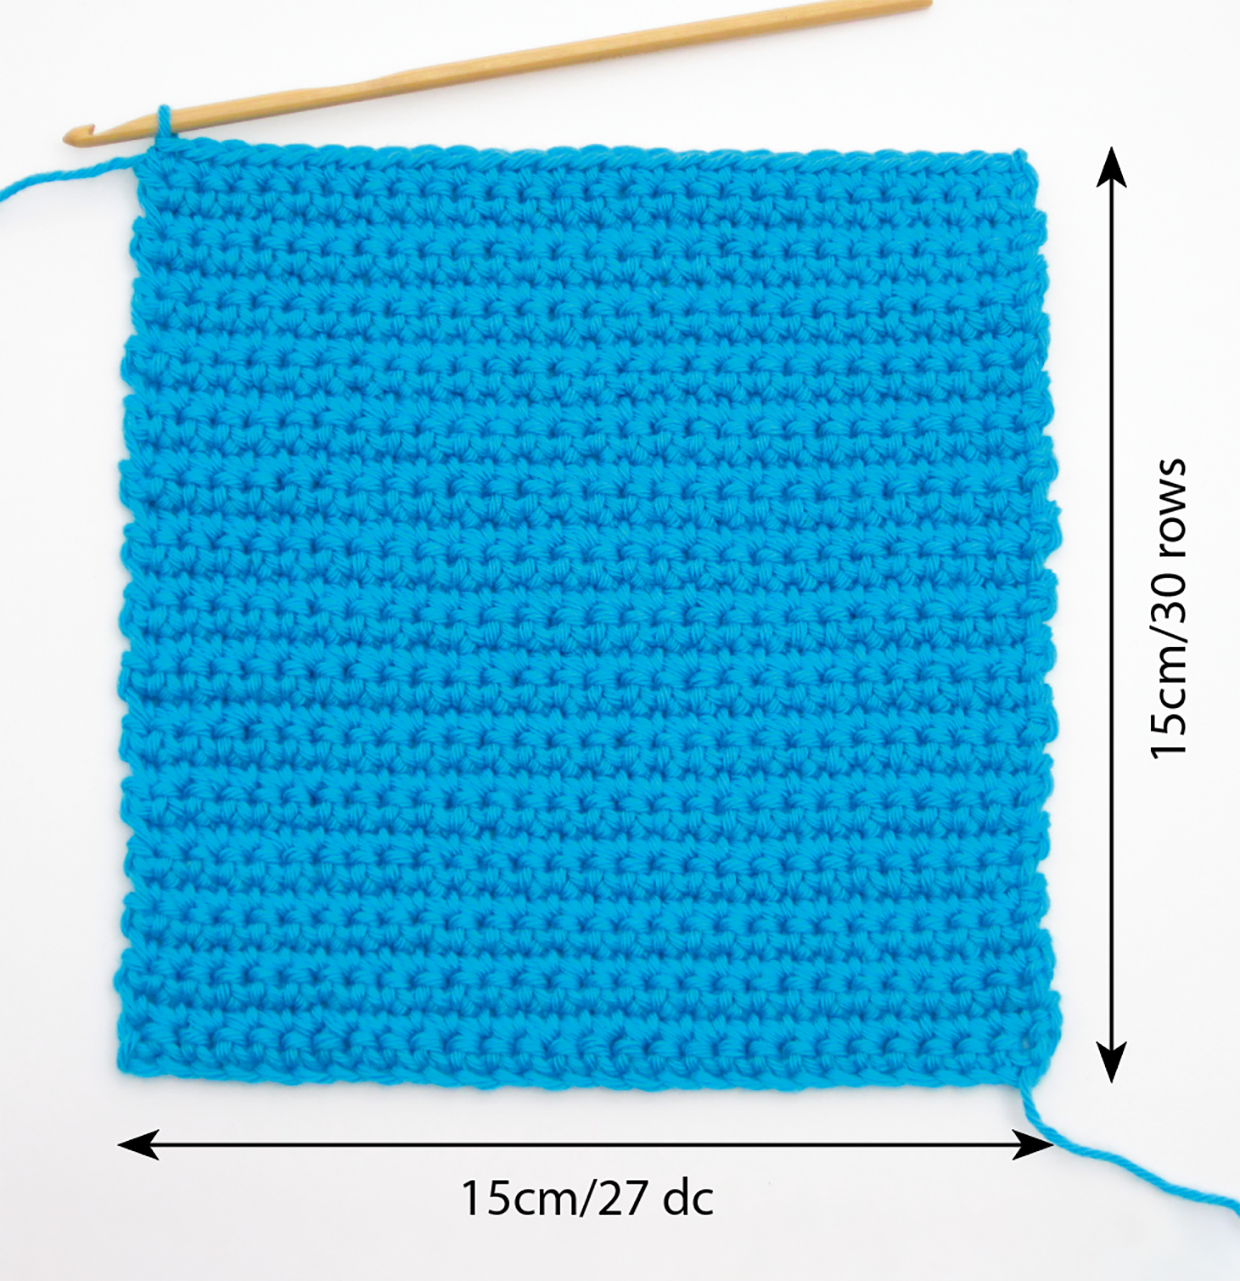 double crochet tension square